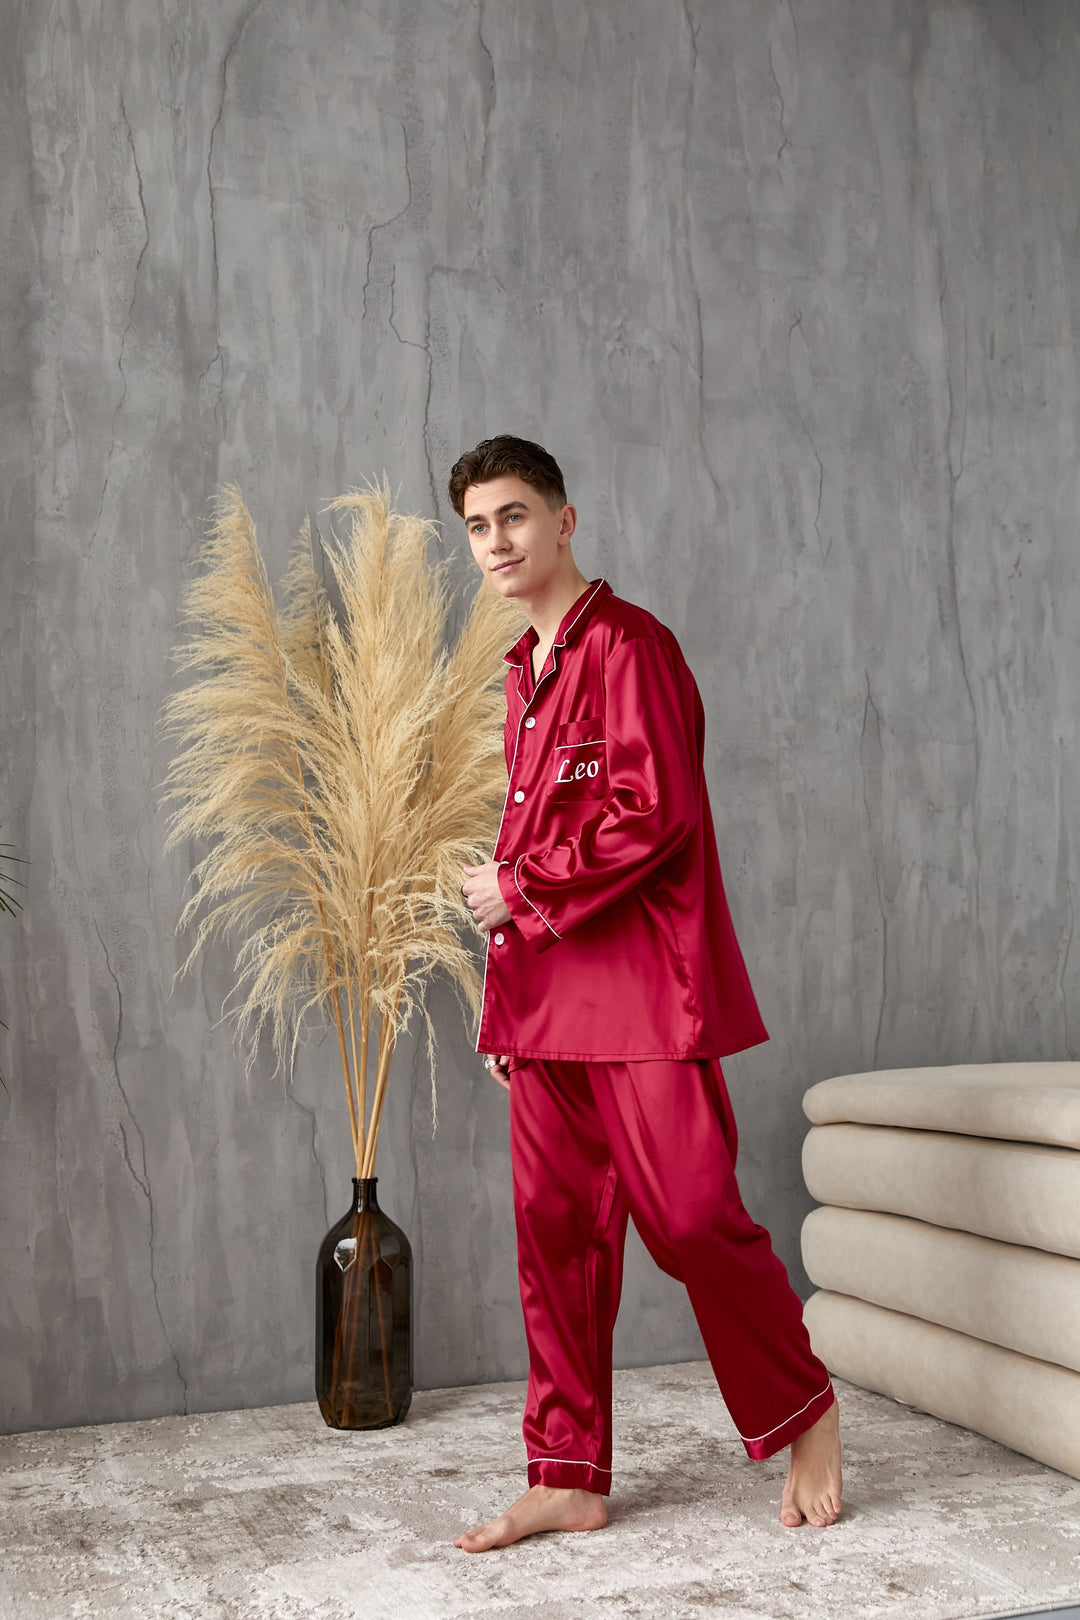 Personalized Men's Satin Pajama Set